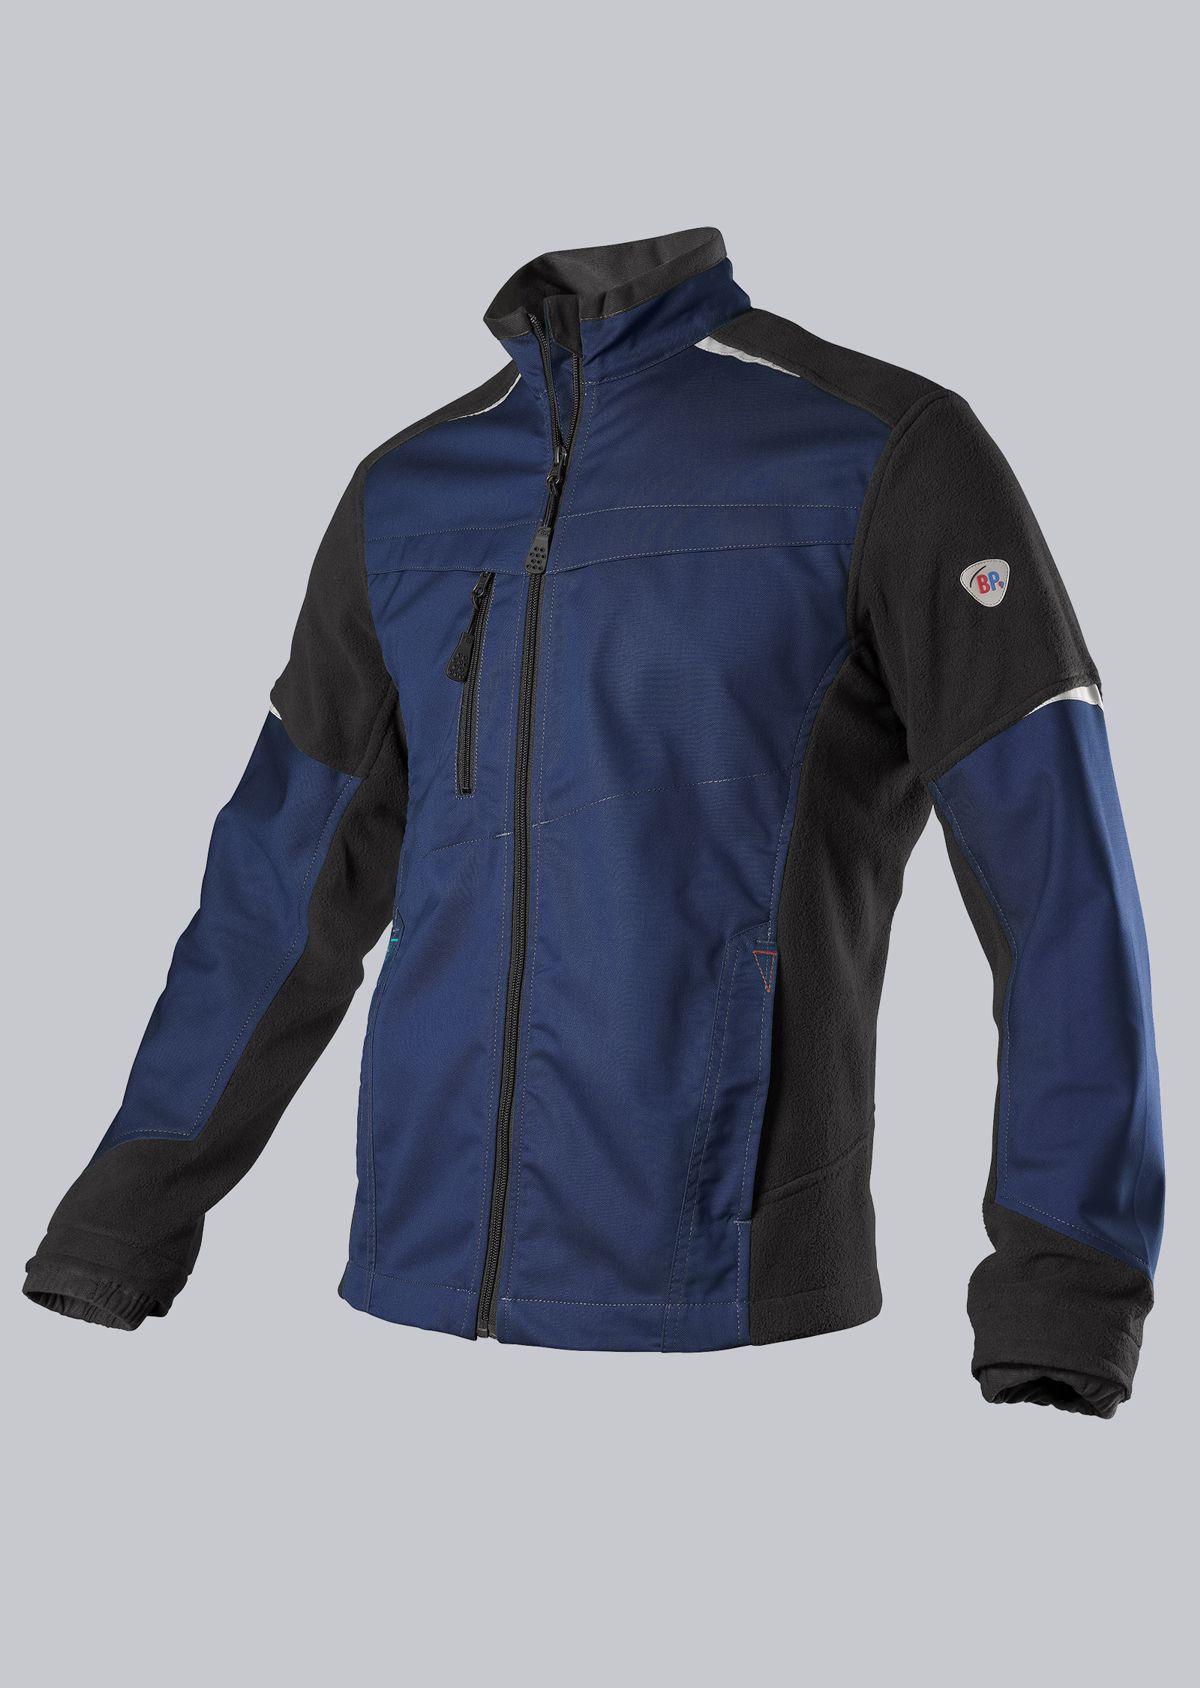 BP® Hybrid work jacket